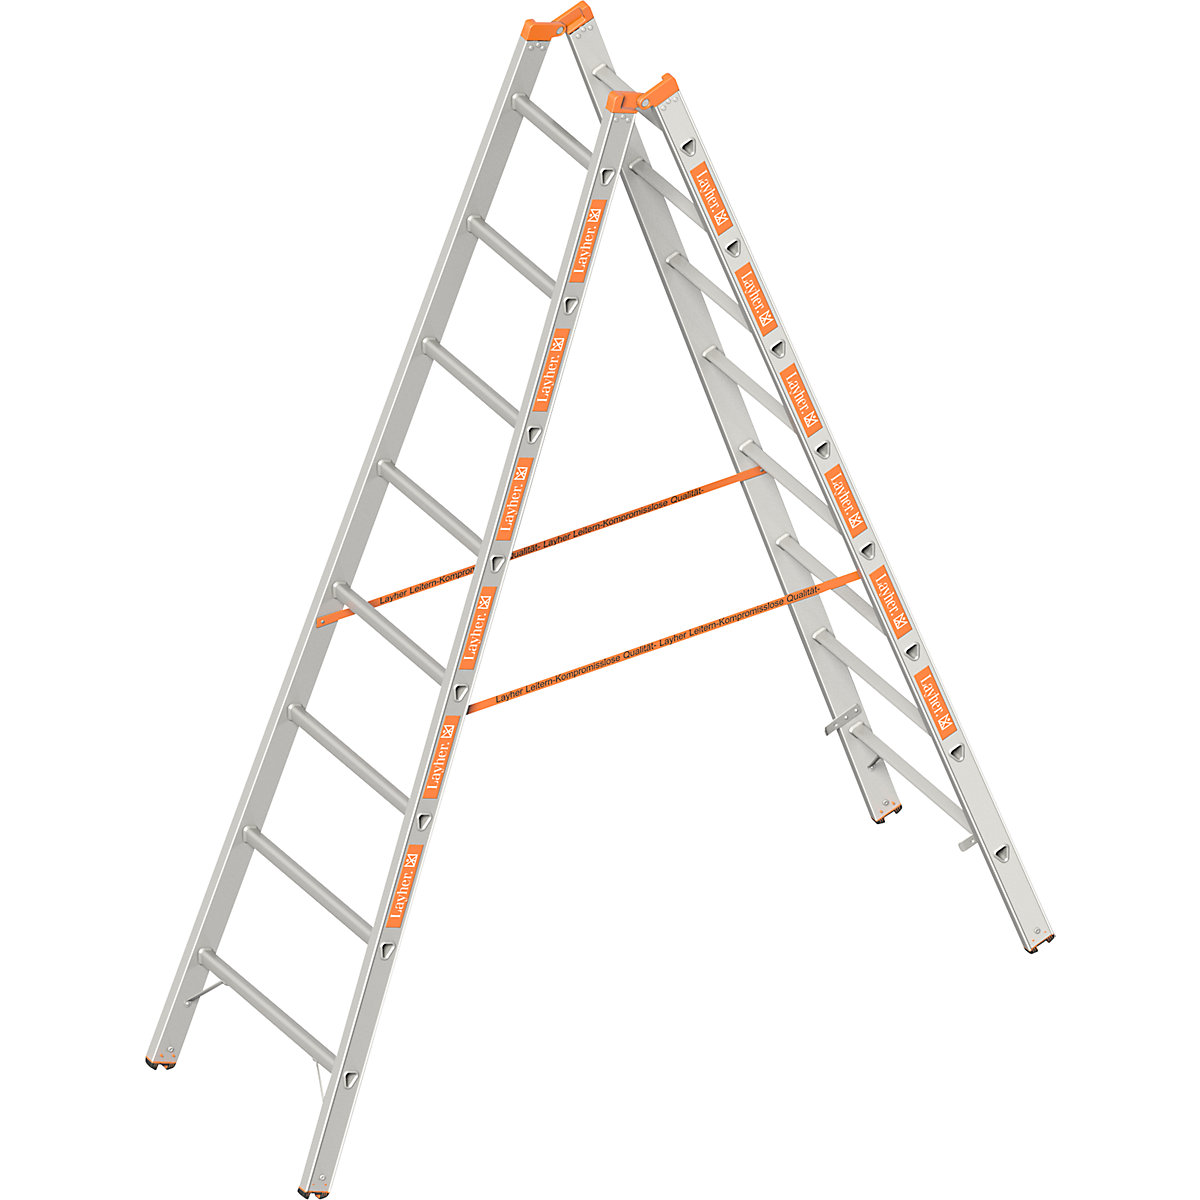 Escada dupla – Layher, subida dos dois lados, 2 x 8 degraus-11